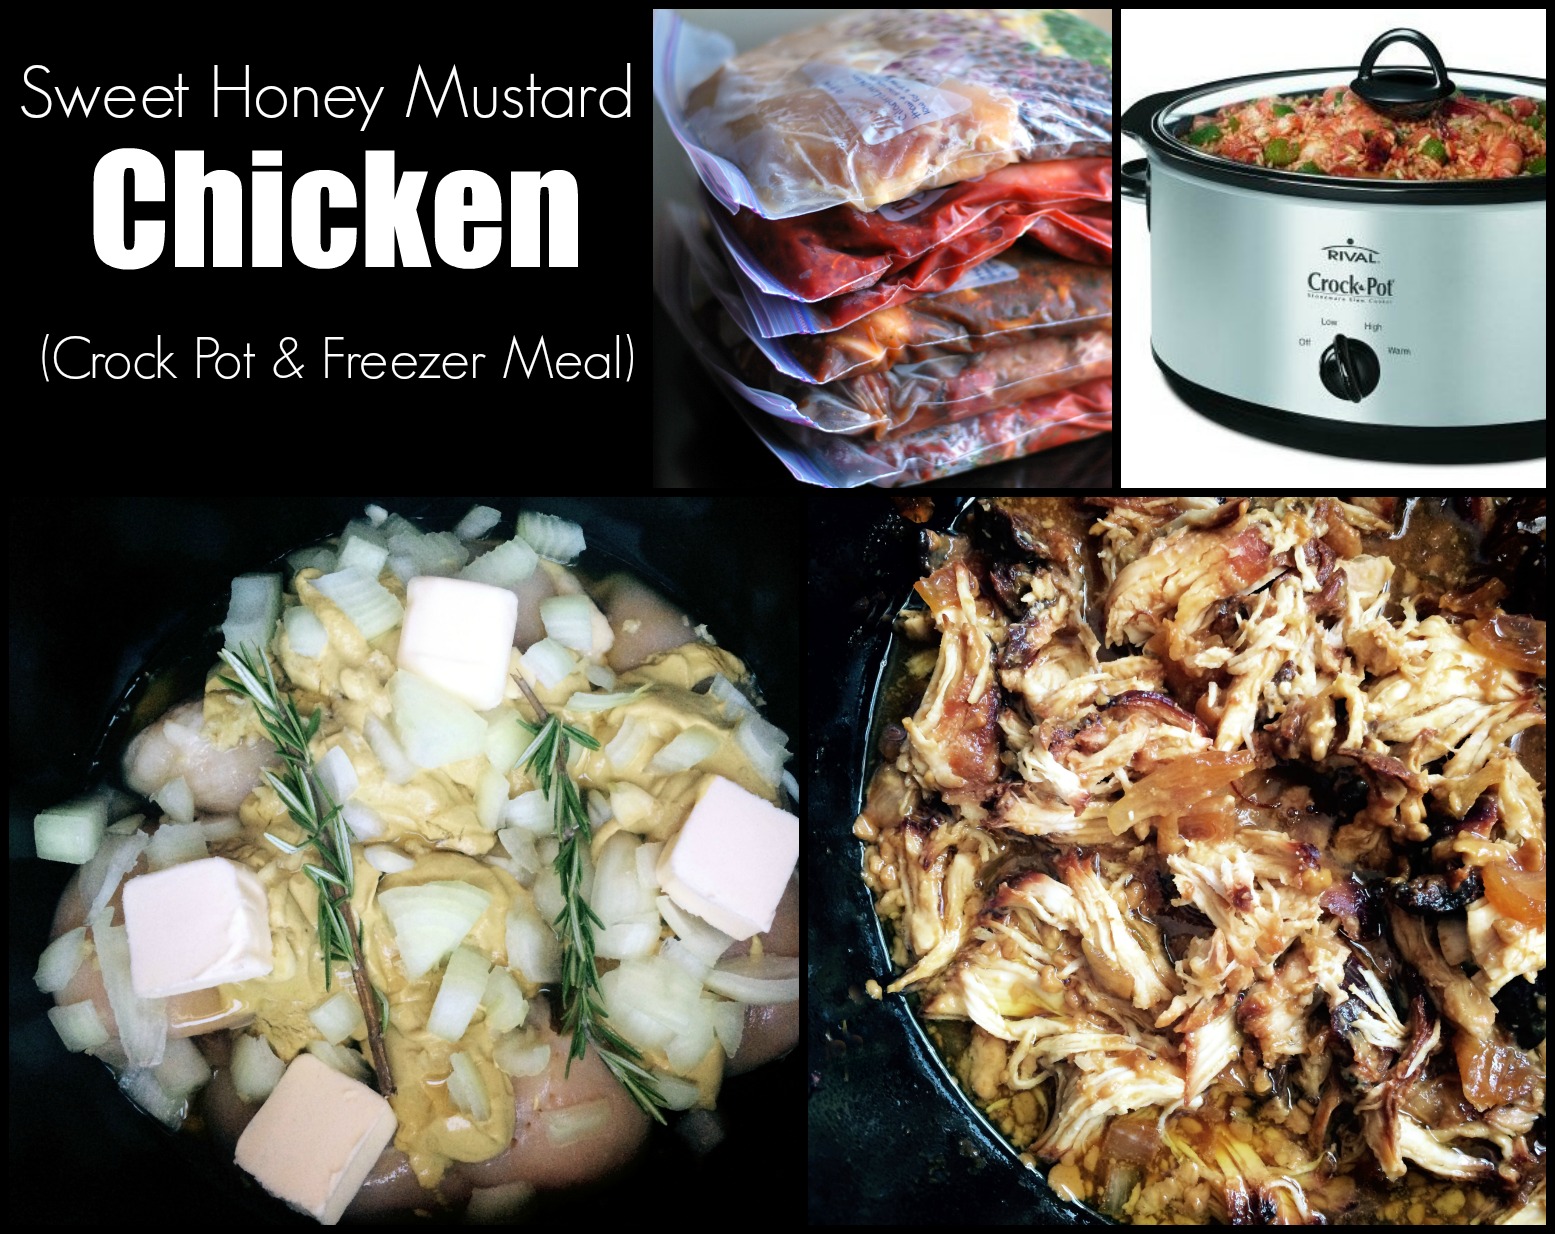 Sweet Honey Mustard Chicken (Crock Pot & Freezer Meal)